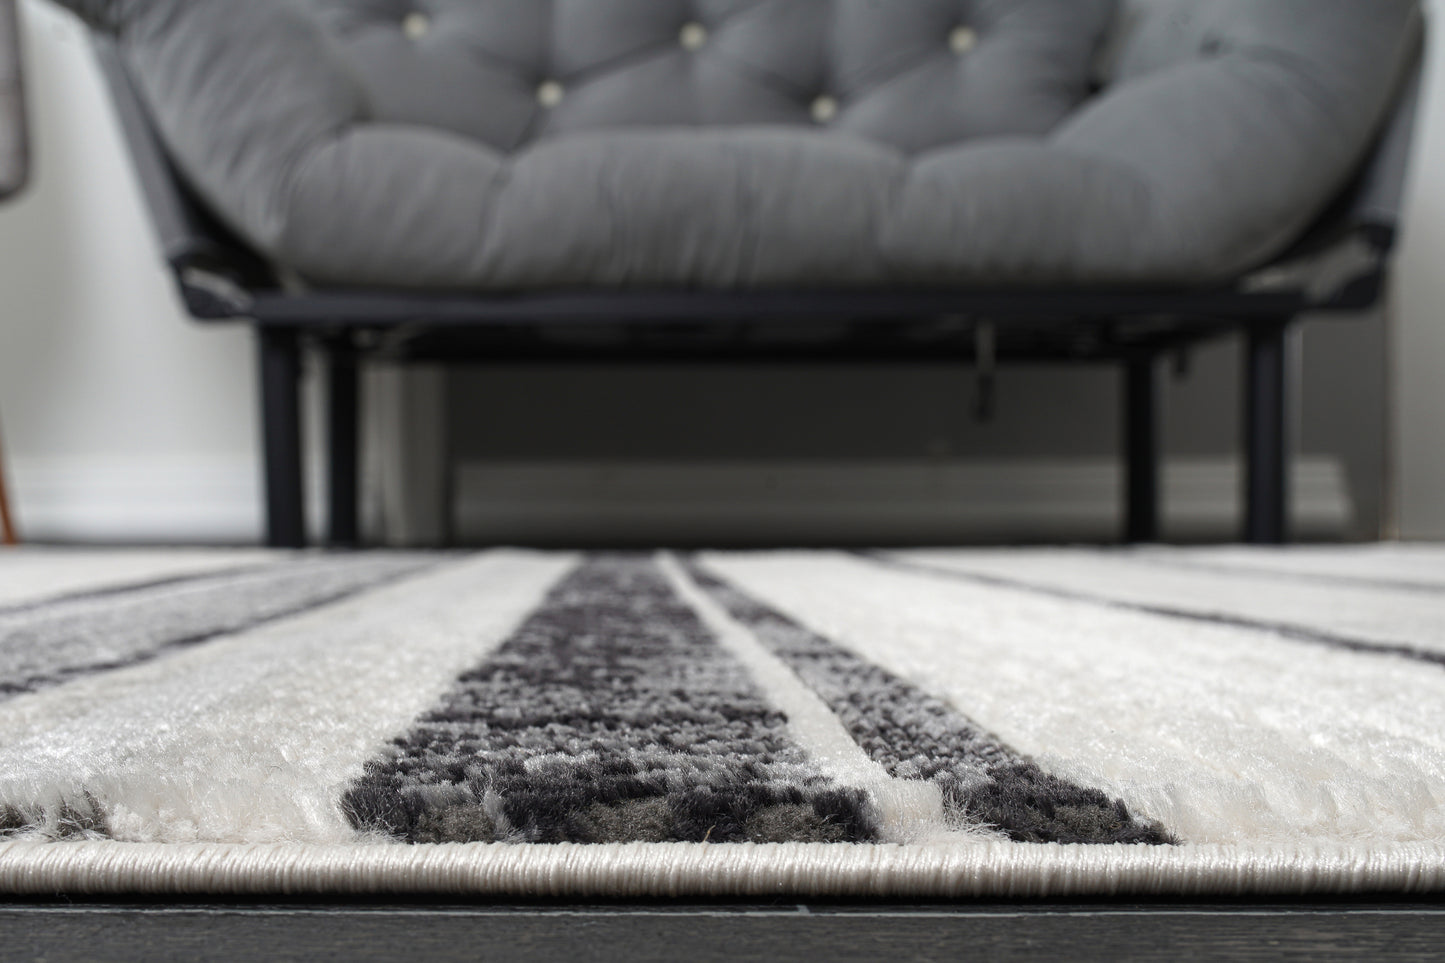 lucas dark light grey modern contemporary area rug 4x6, 4x5 ft Small Carpet, Home Office, Living Room, Bedroom